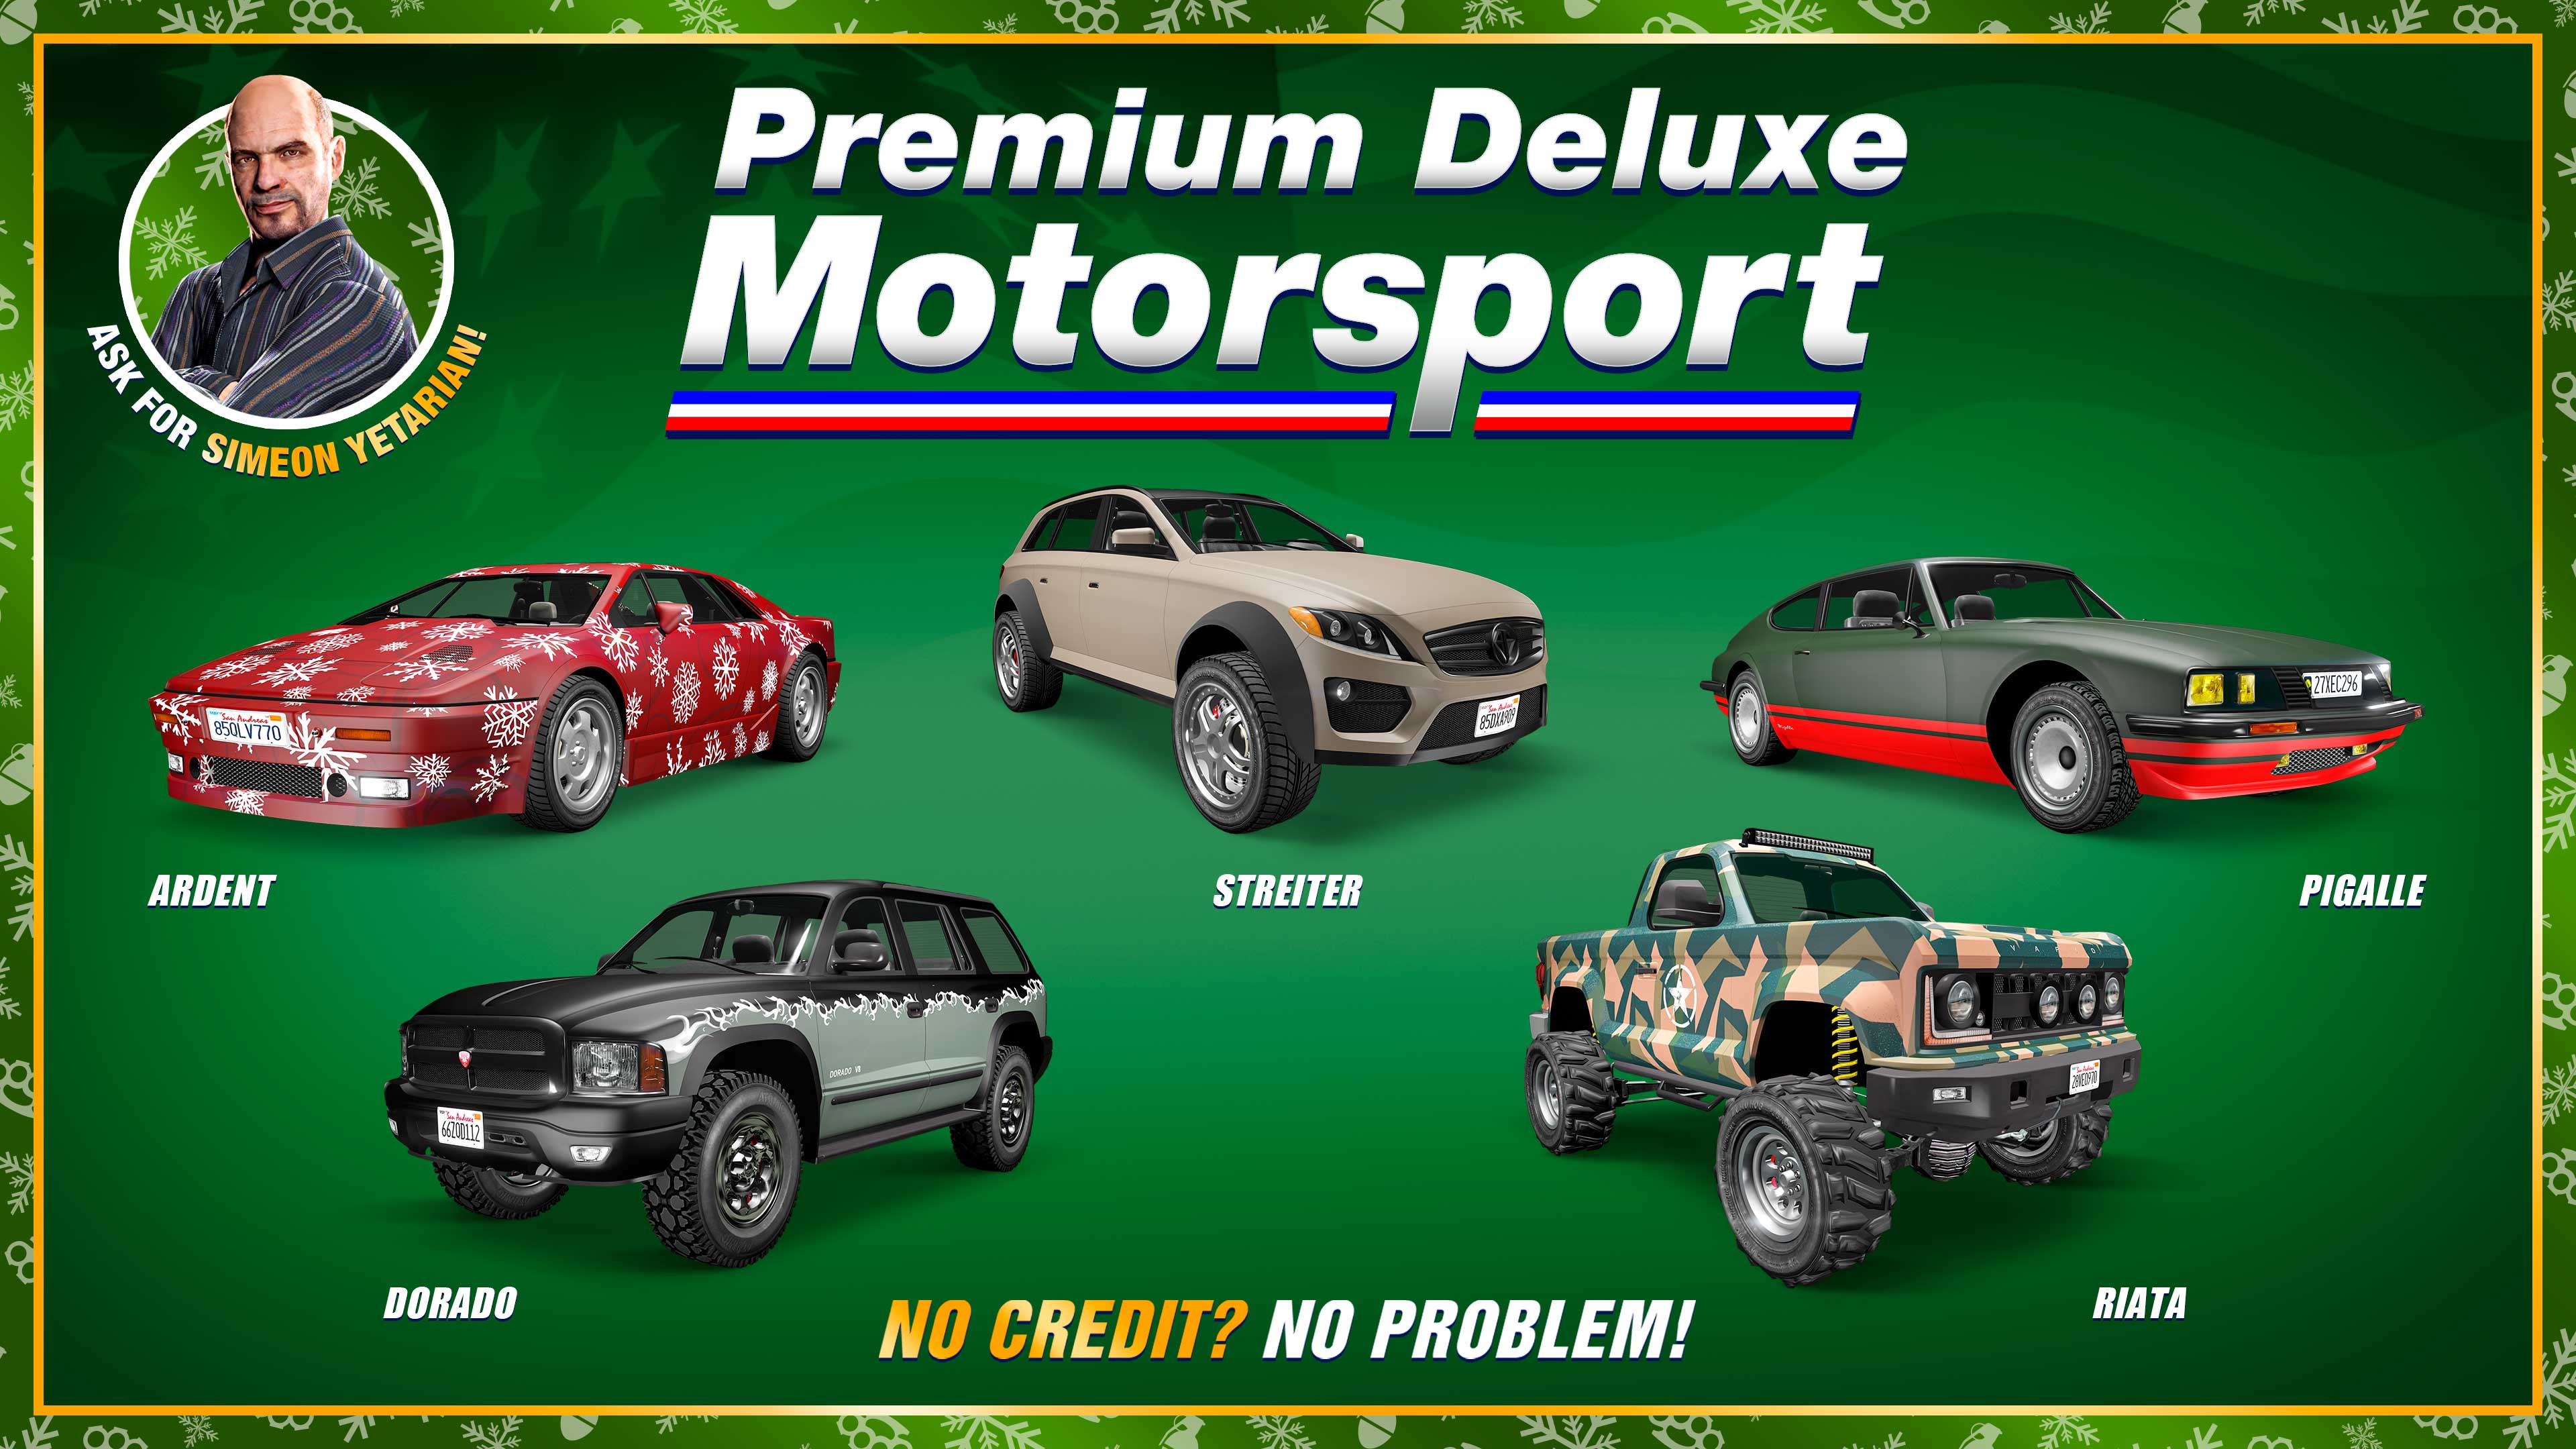 Affiche du showroom de Premium Deluxe Motorsport avec le Bravado Dorado, l’Ocelot Ardent, la Benefactor Streiter, la Vapid Riata et la Lampadati Pigalle